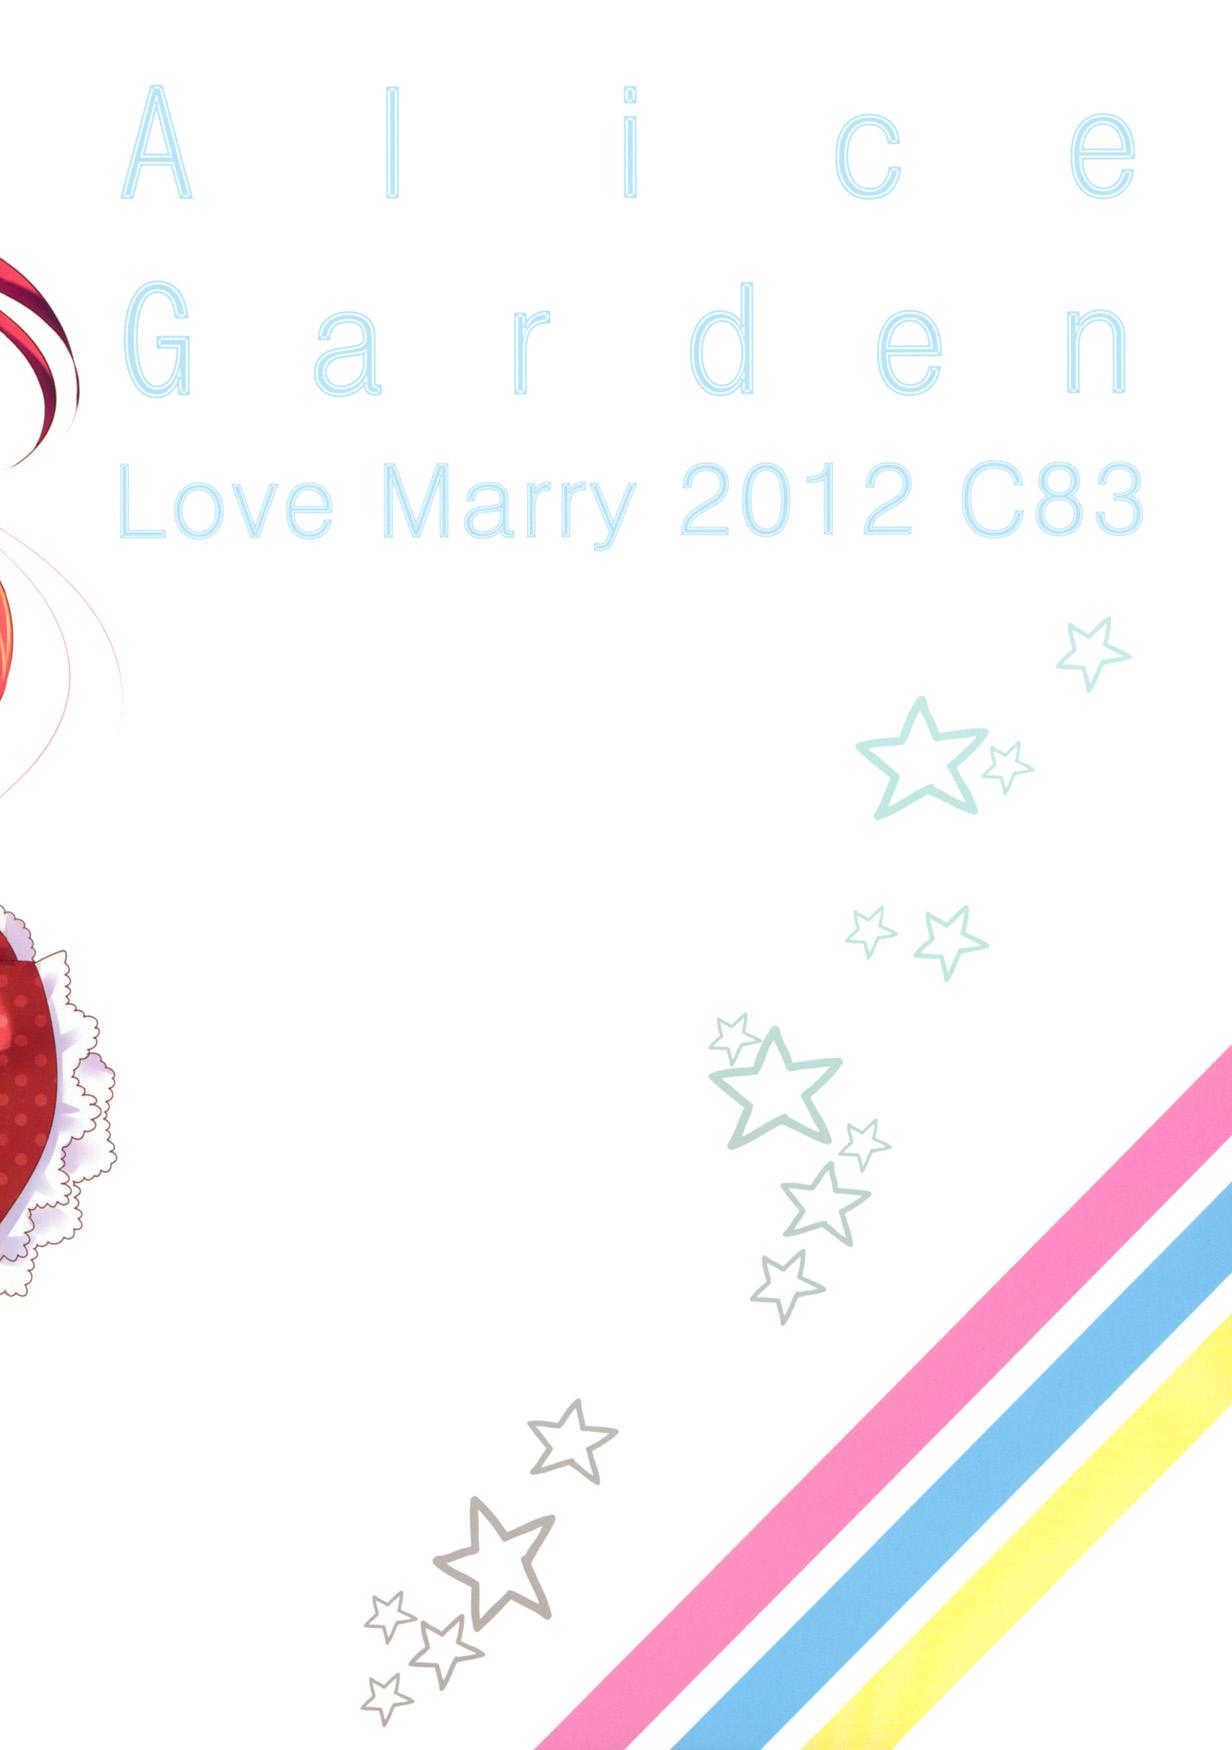 Love Marry 15